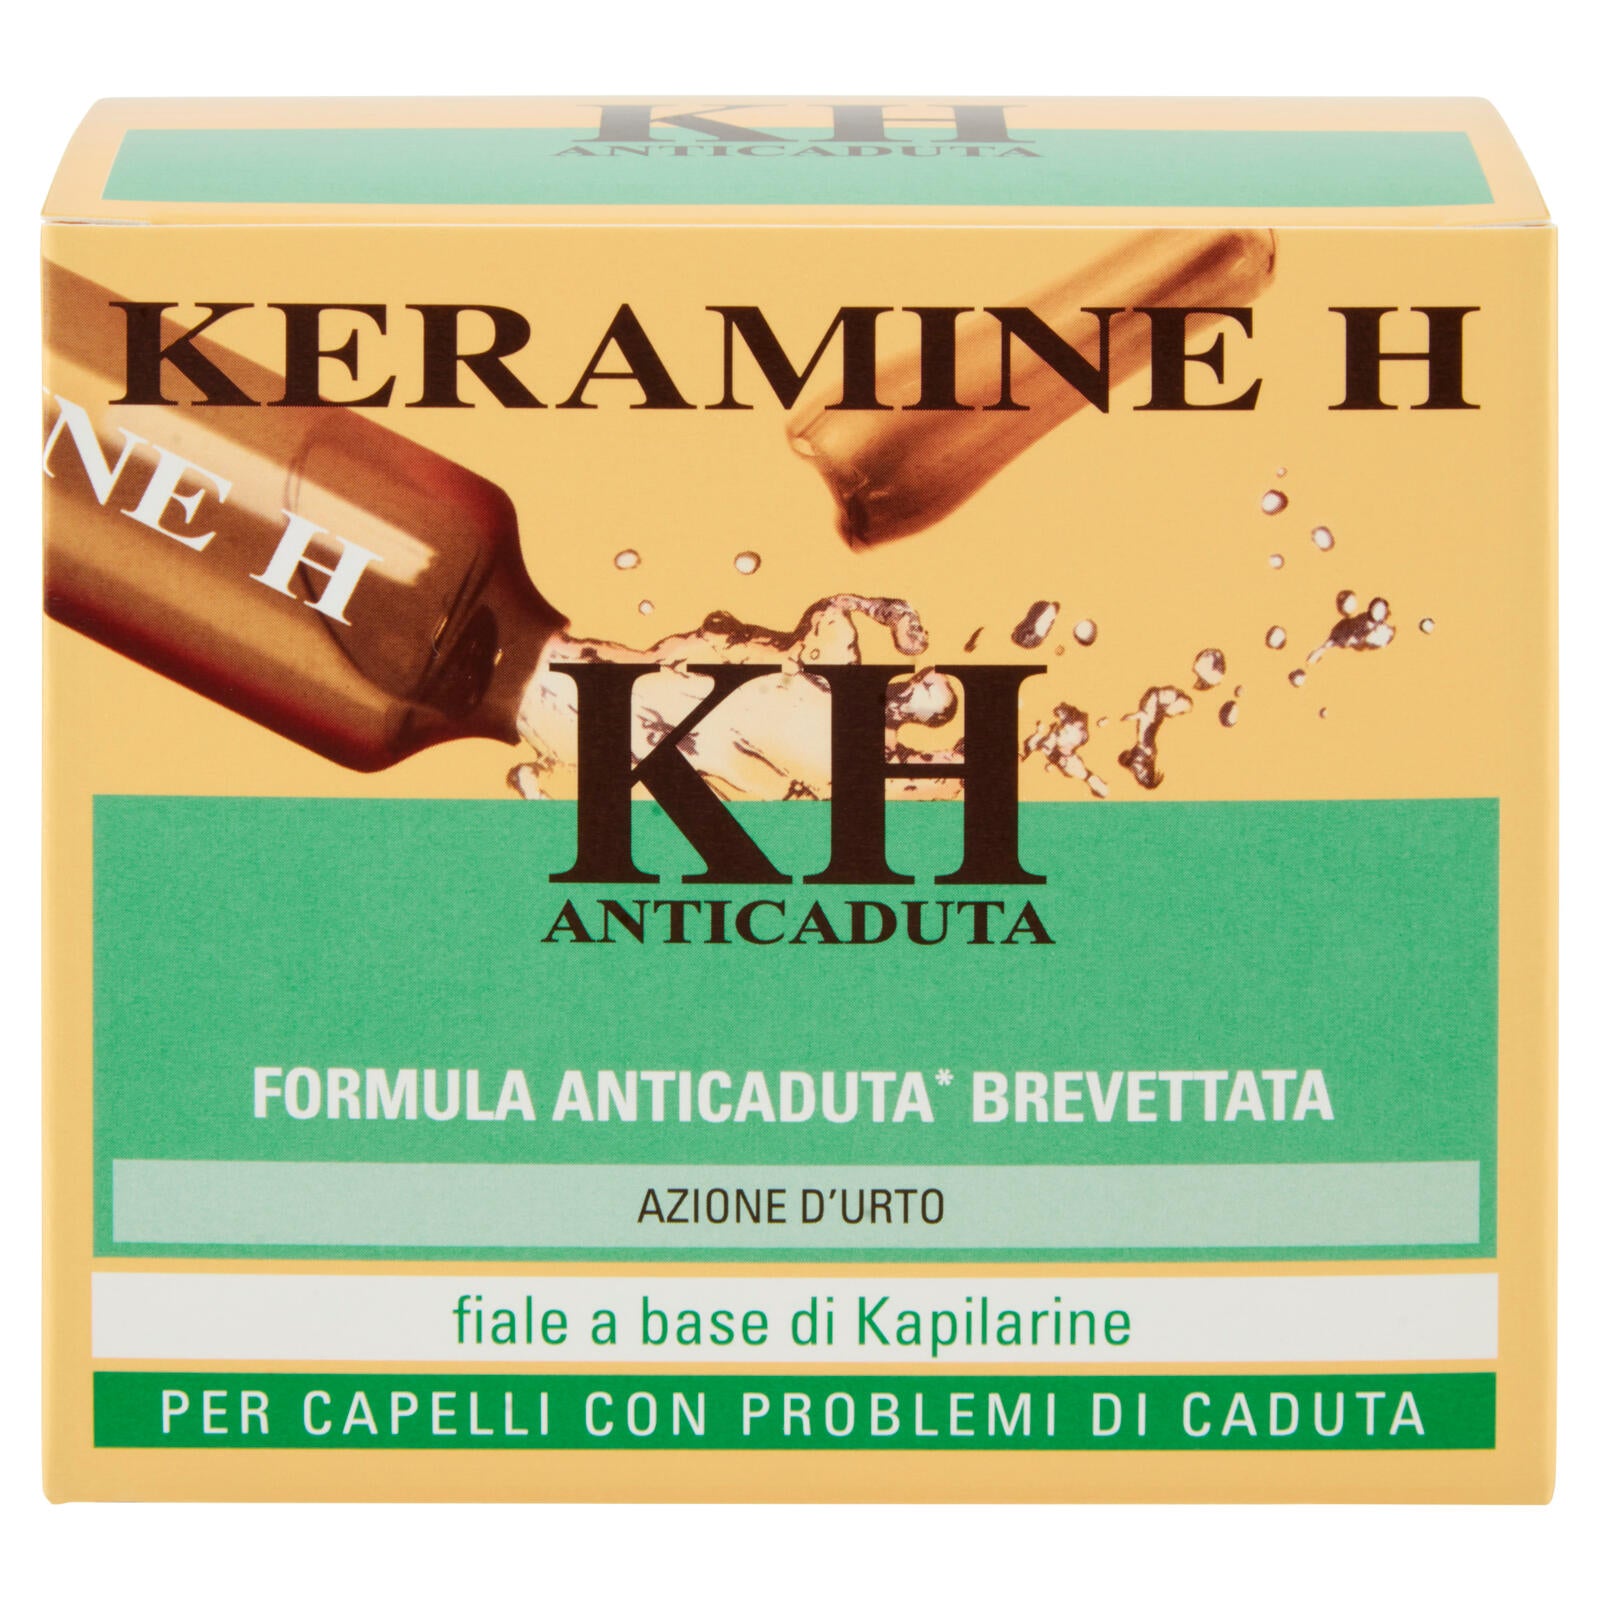 Keramine H Anticaduta Azione d'Urto 12 x 6 ml